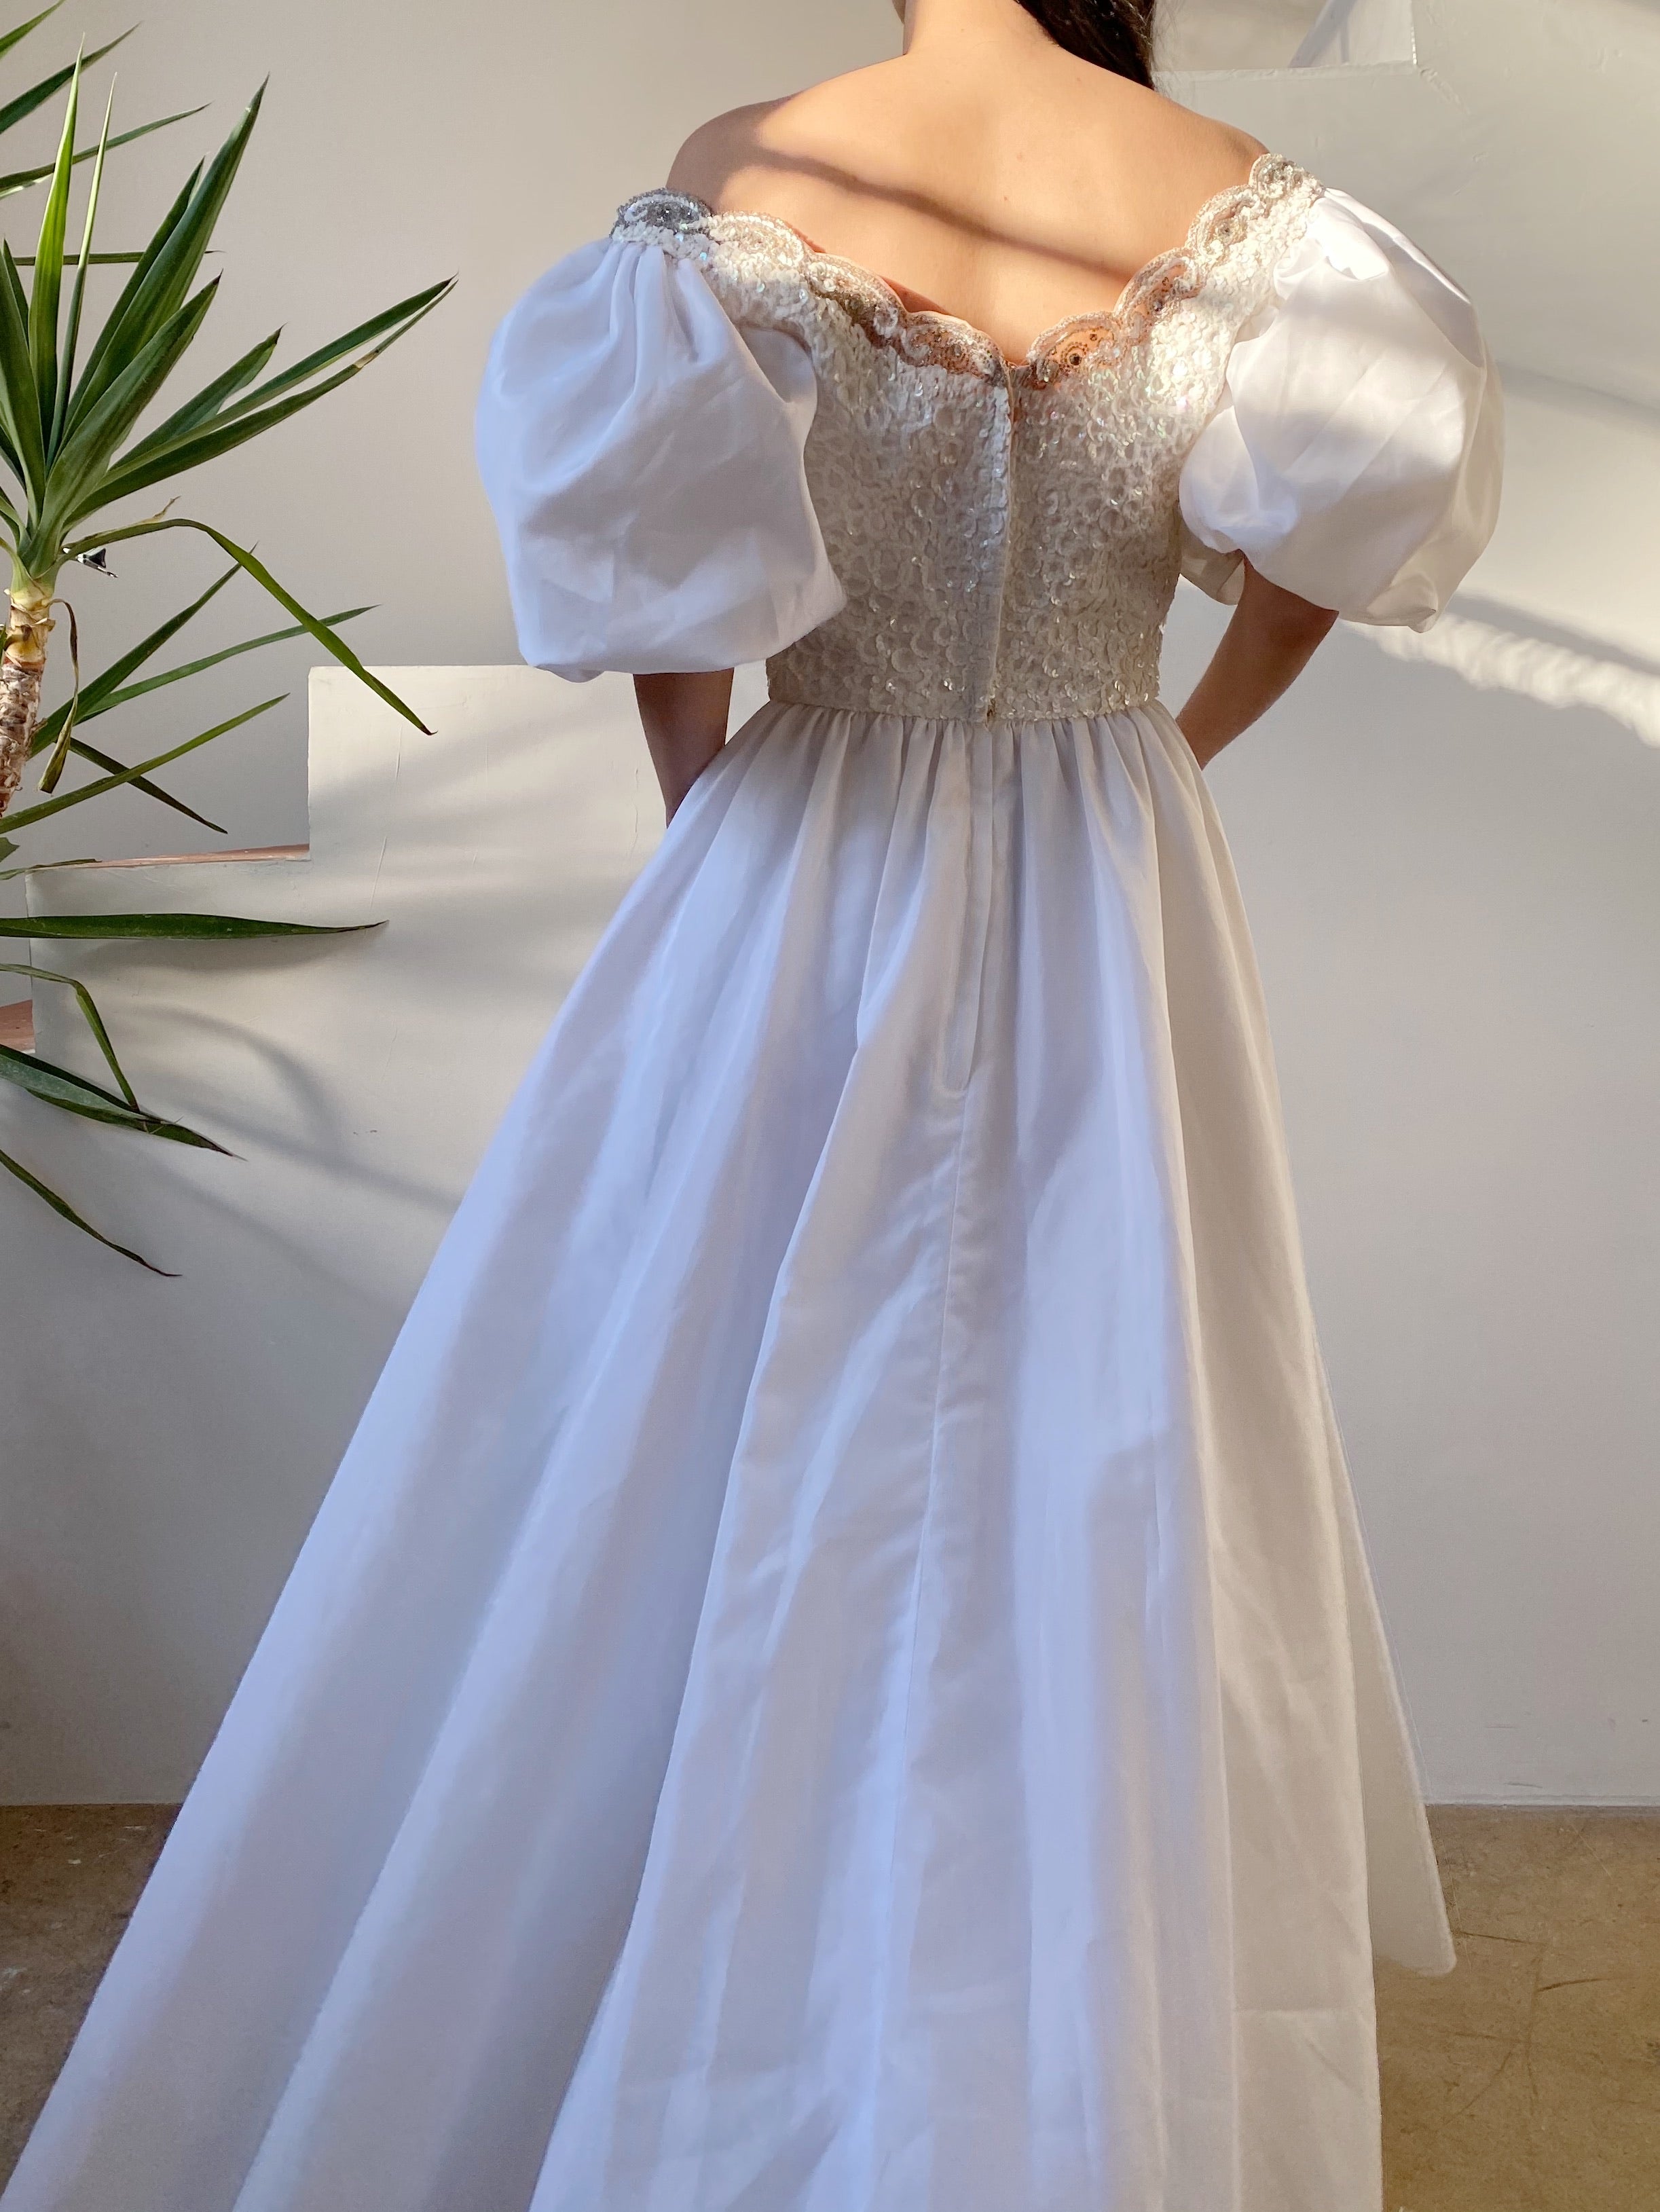 1980s Puff Sleeve Tea-Length Dress - XS/S